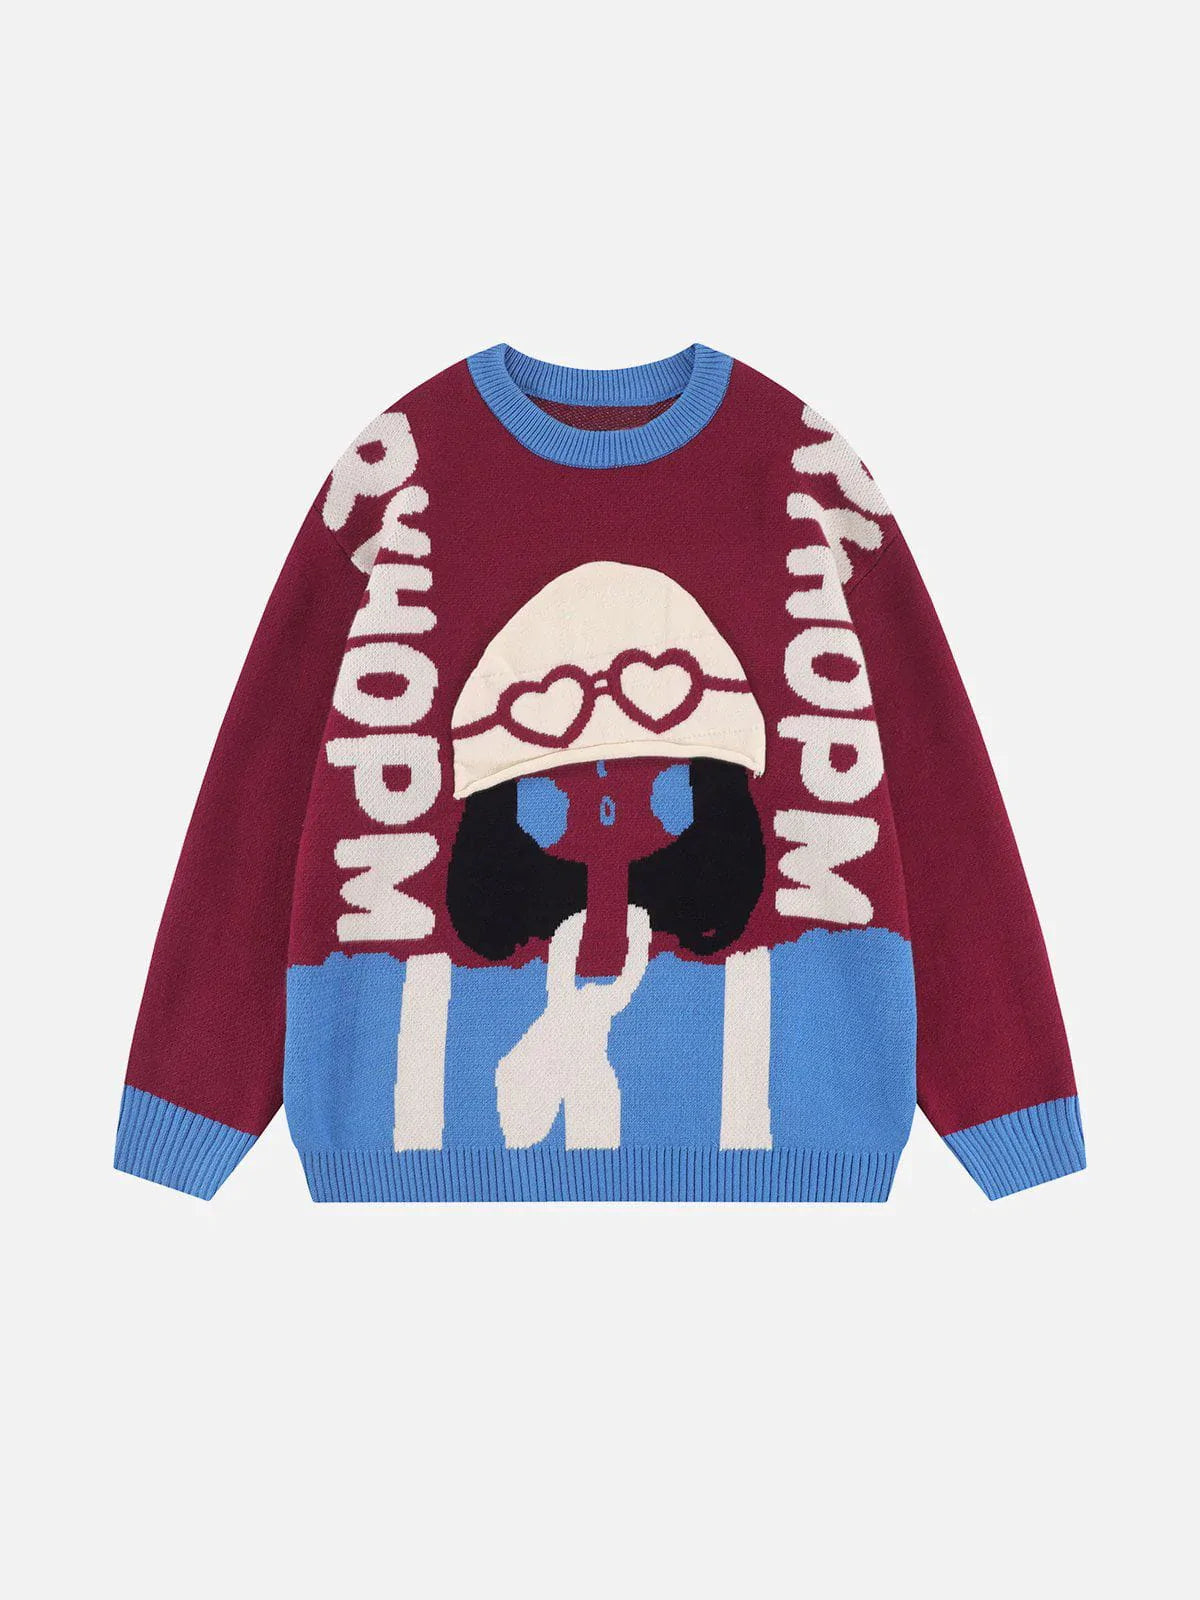 Majesda® - Fun Jacquard Patch Sweater outfit ideas streetwear fashion